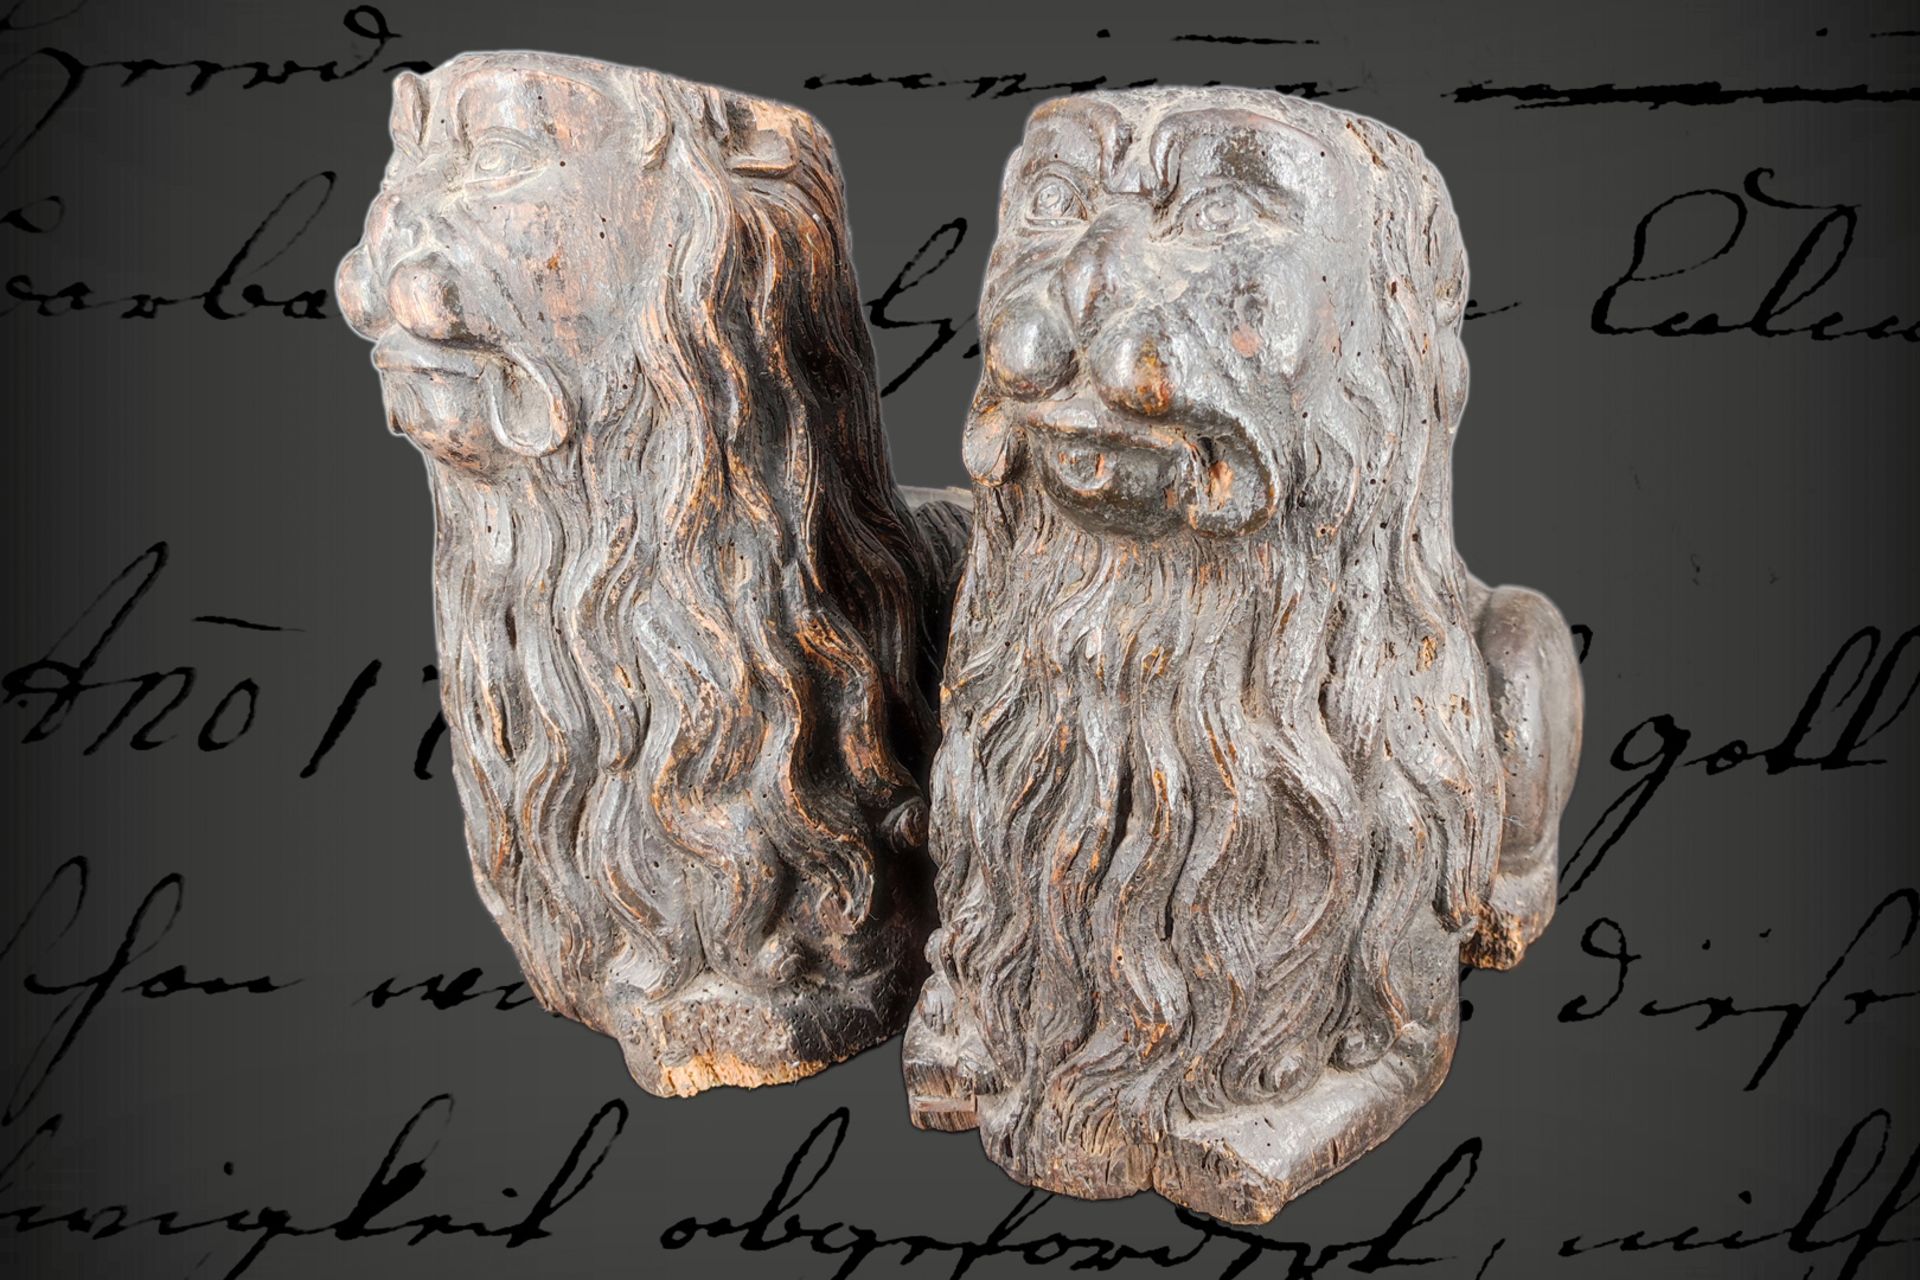 2 Uralt-Löwen, Holz, geschnitzt, als Sockel oder Fuß, 17. Jh., L 35 cm, Alterungsspuren